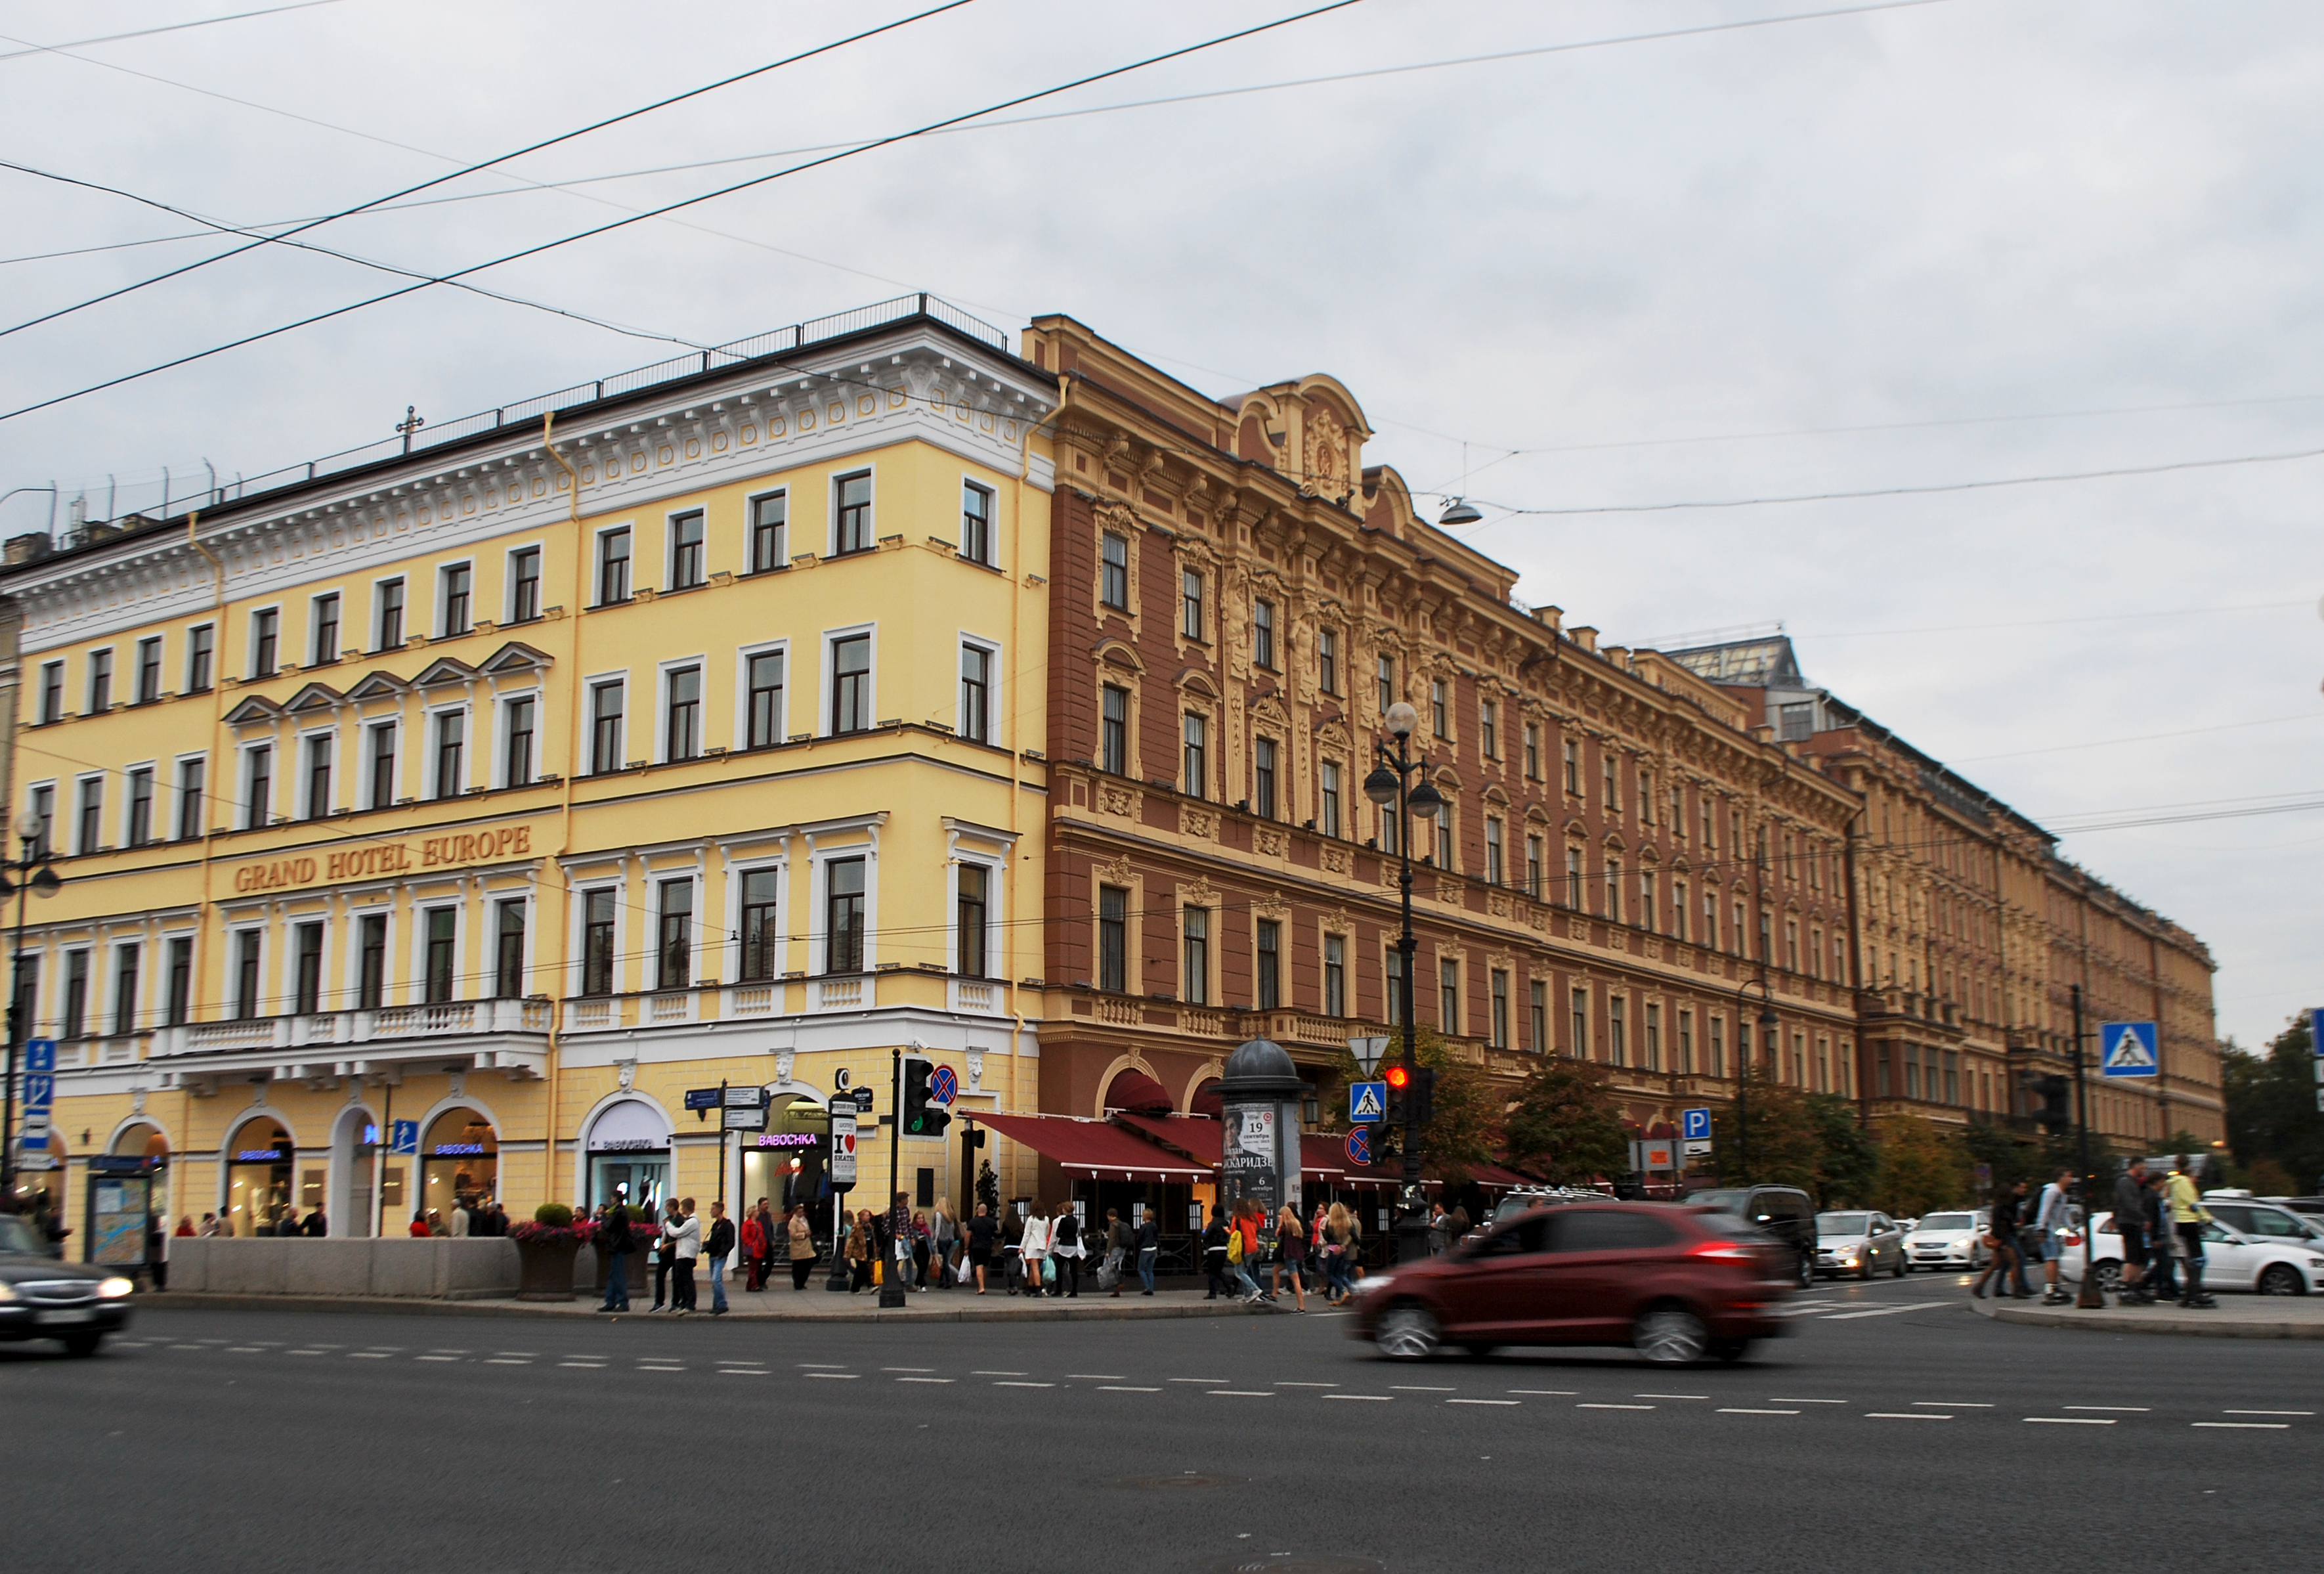 File:Belmond Grand Hotel Europe Saint Petersburg Hall.jpg